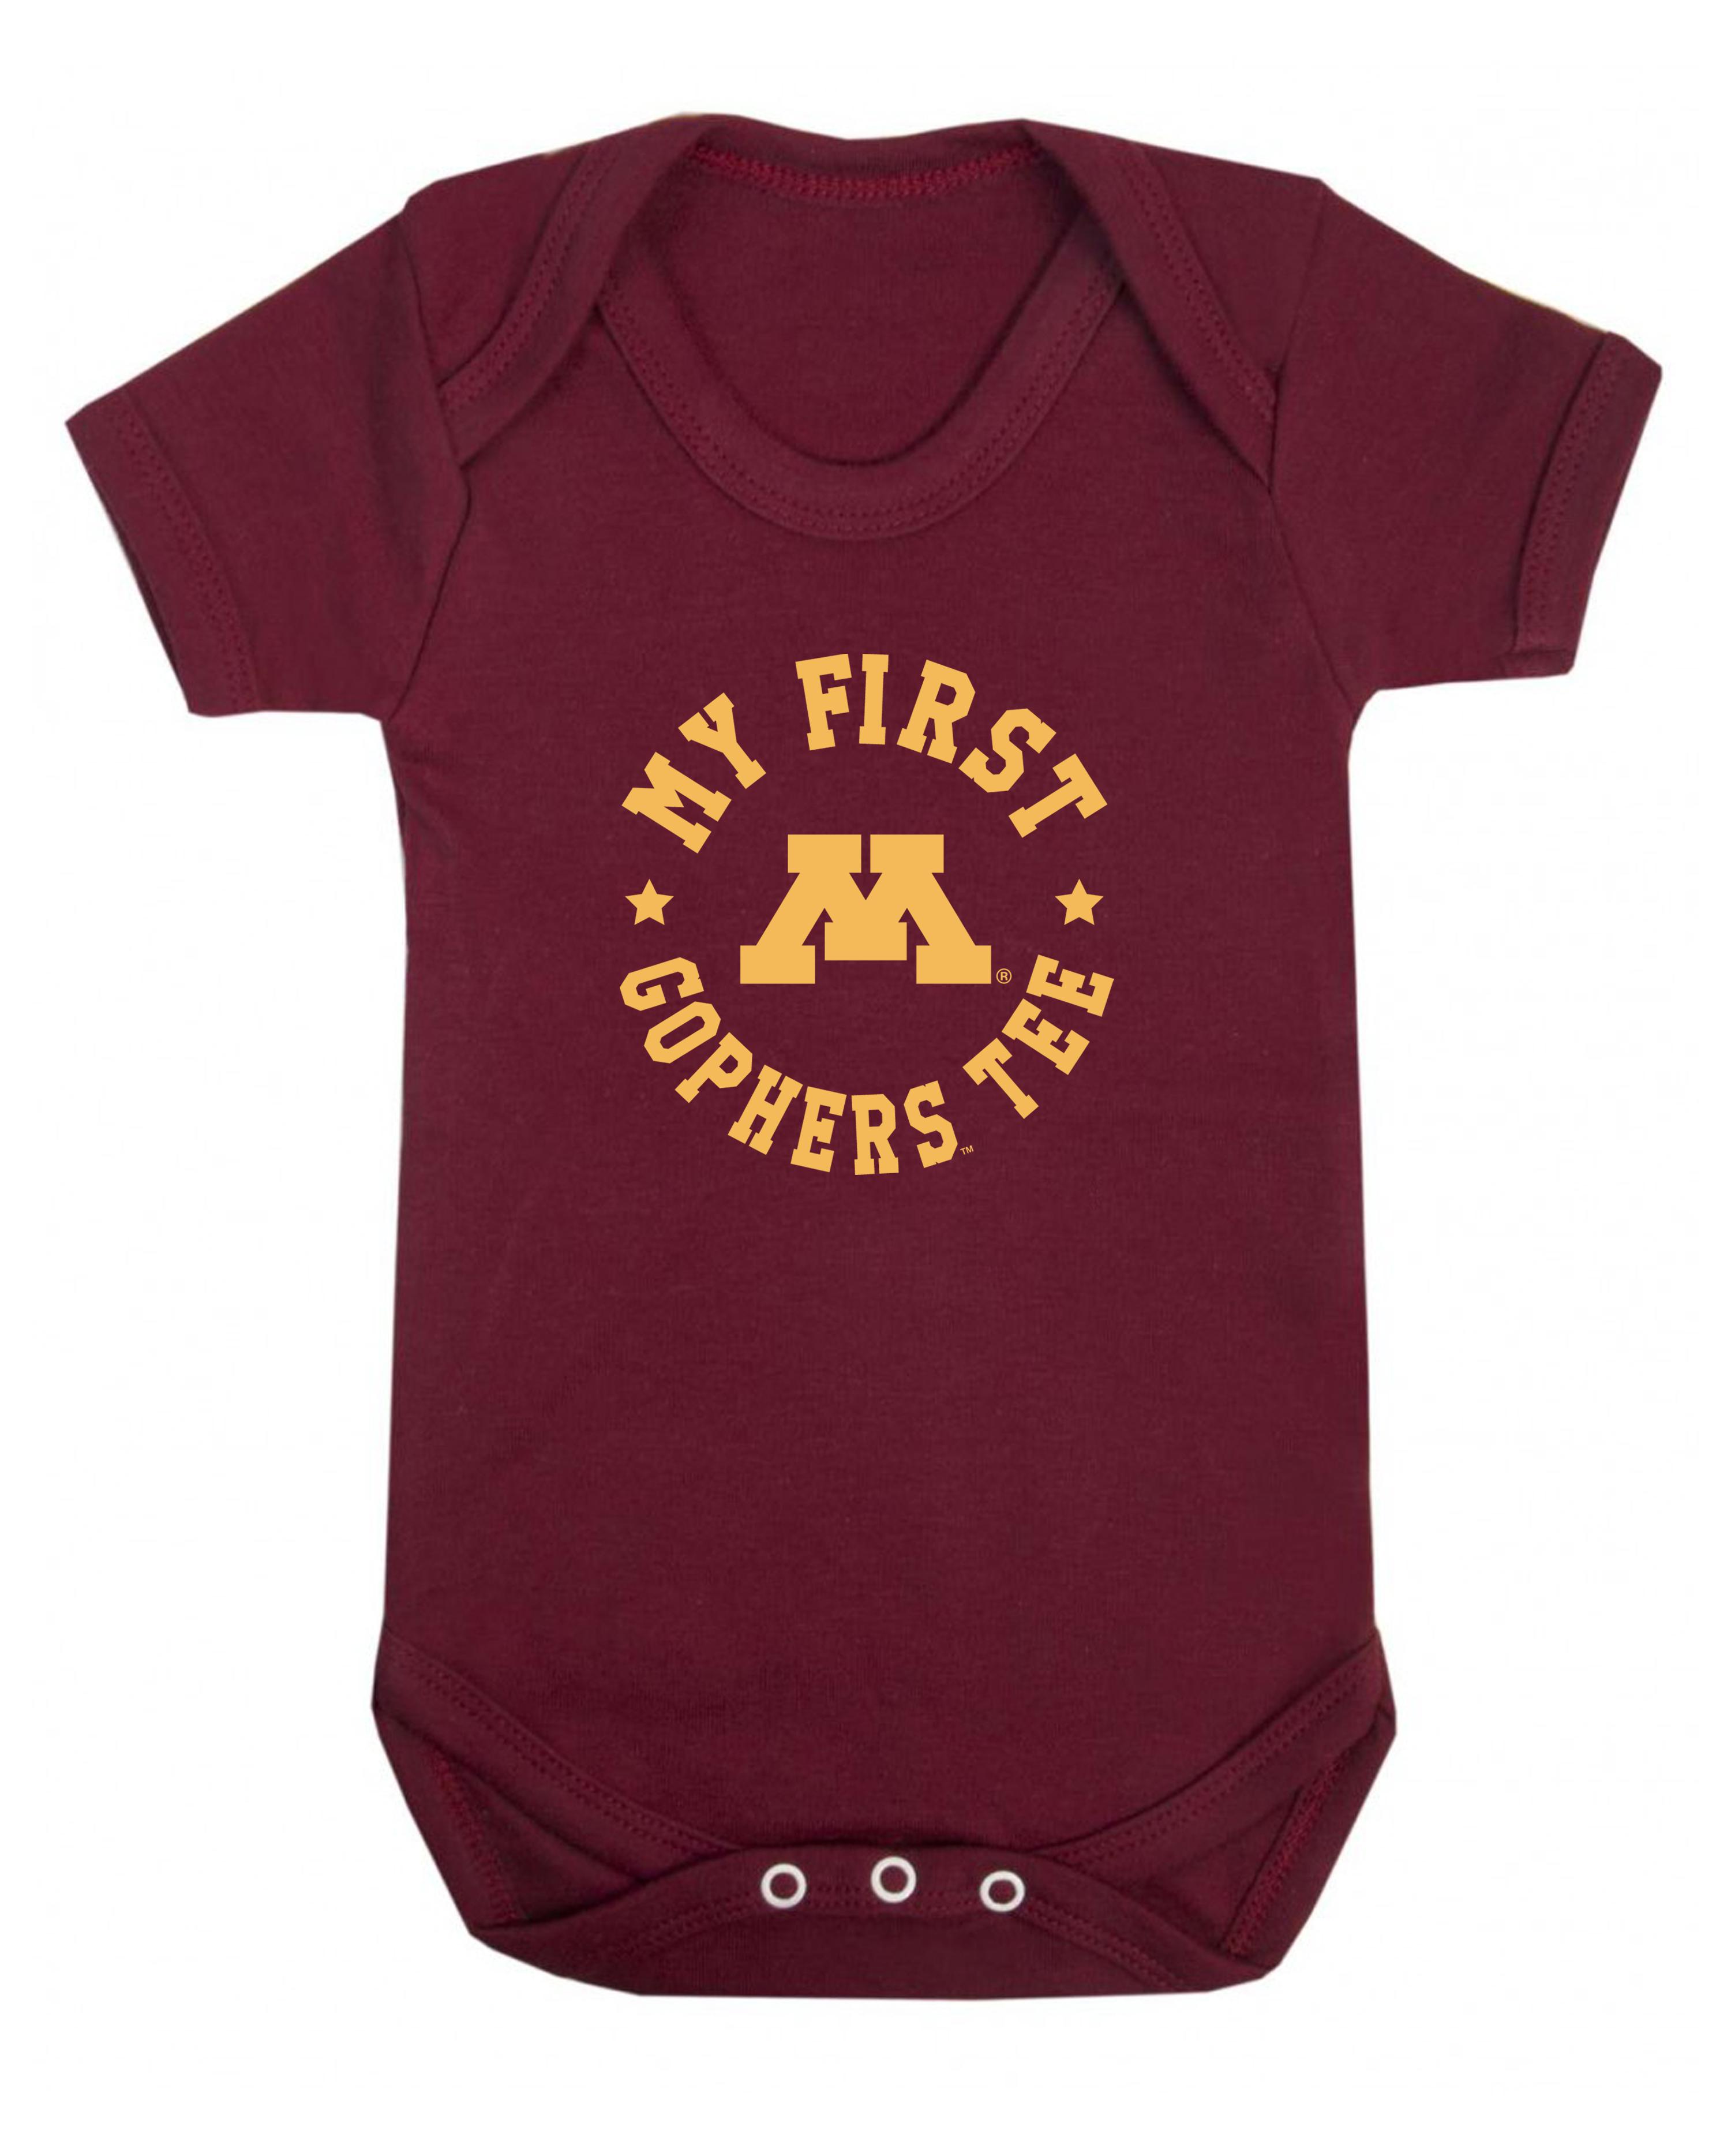 Newborn & Infants' Bodysuit - University of Minnesota Golden Gophers